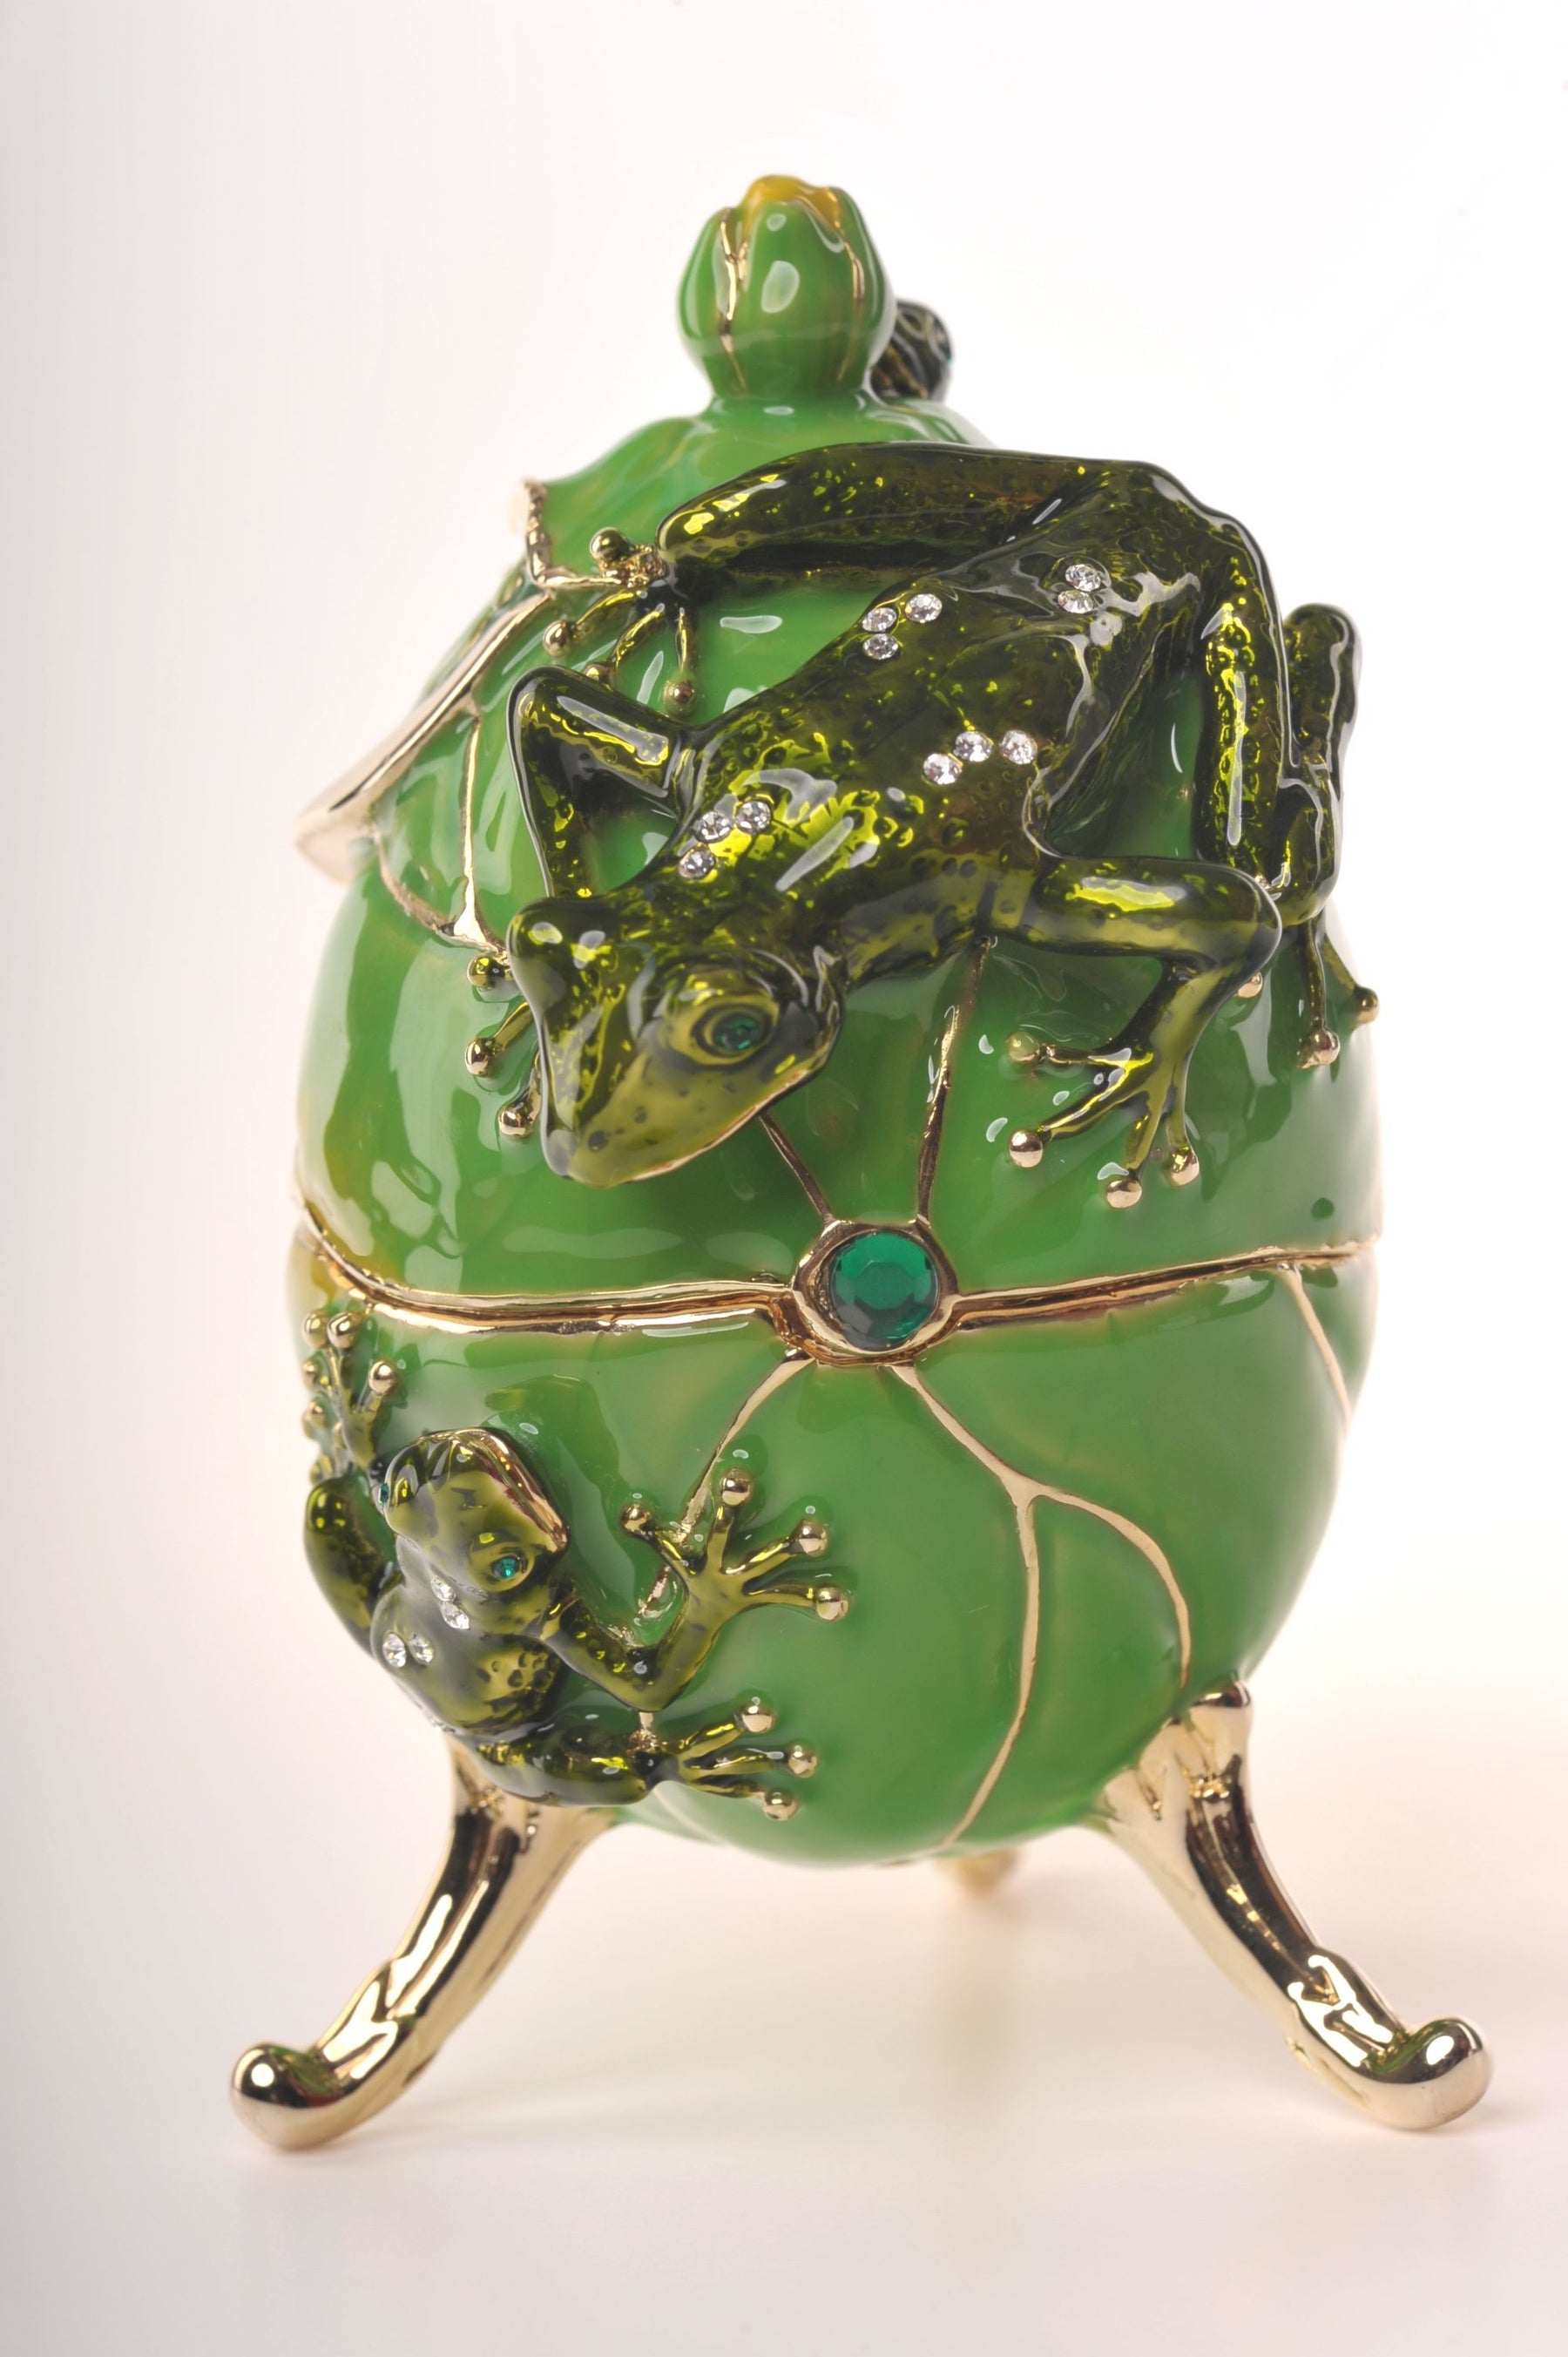 Keren Kopal Frogs Faberge Egg  118.00